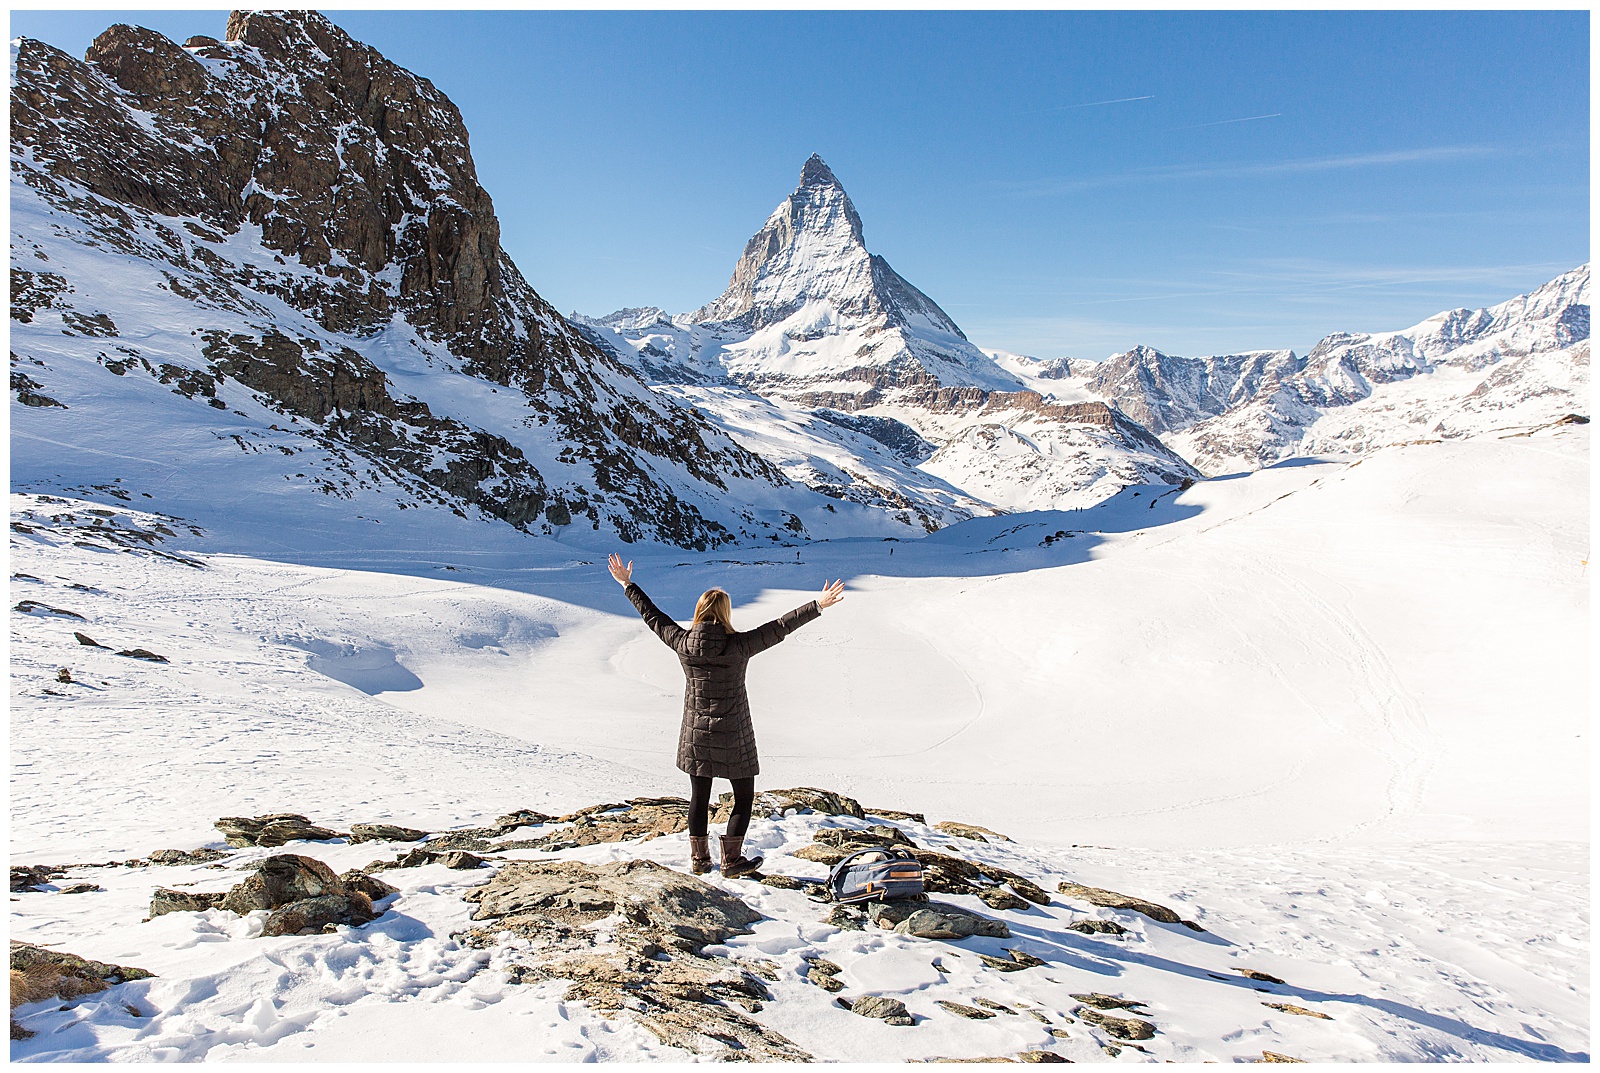 Switzerland winter vacation in Zermatt: larger than life views